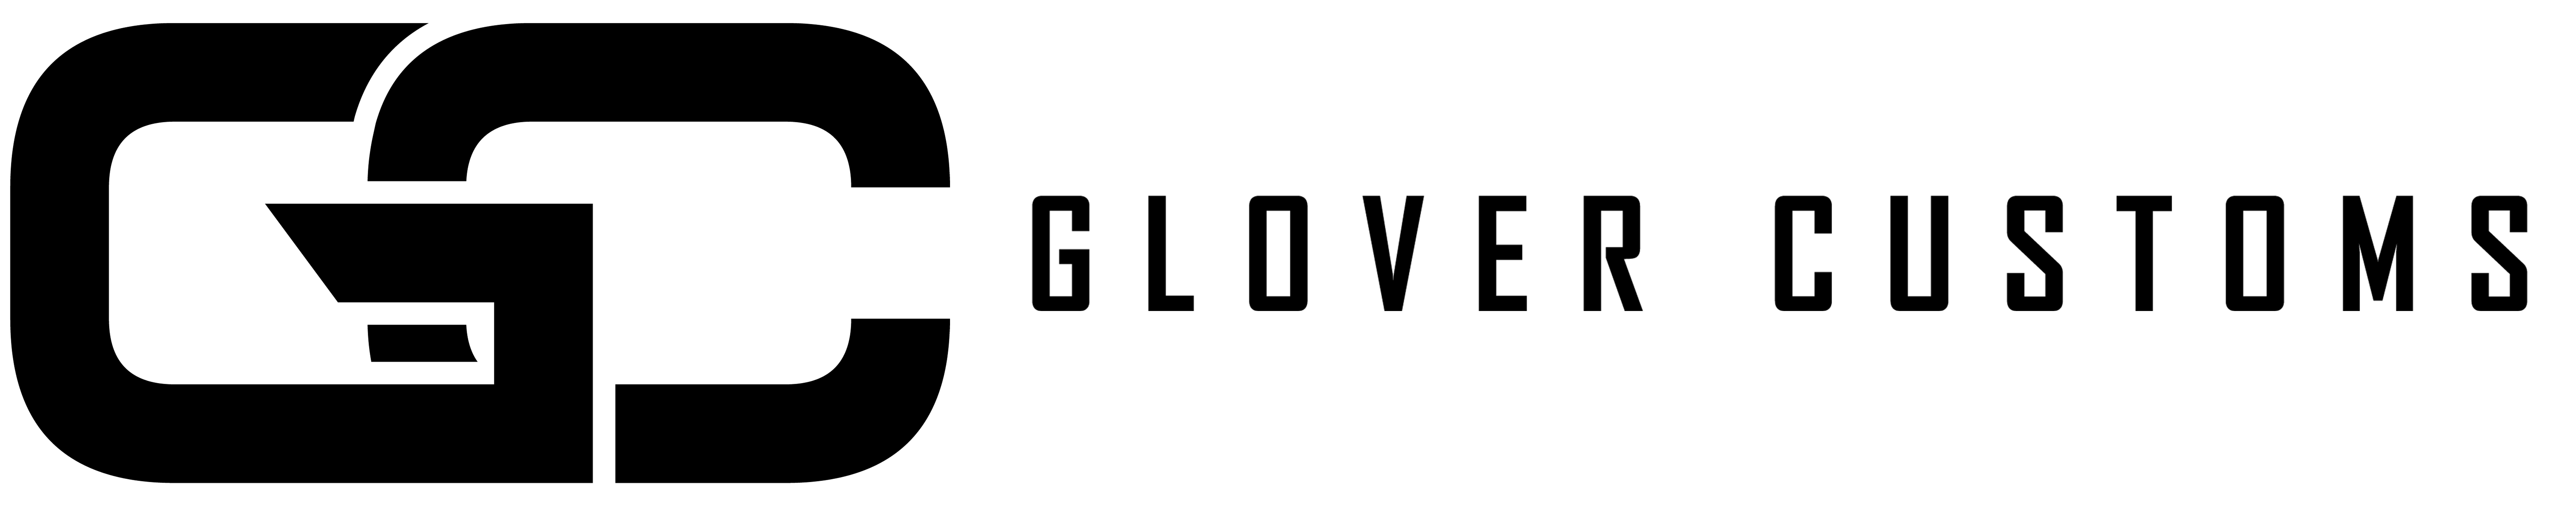 Glover Customs-logo